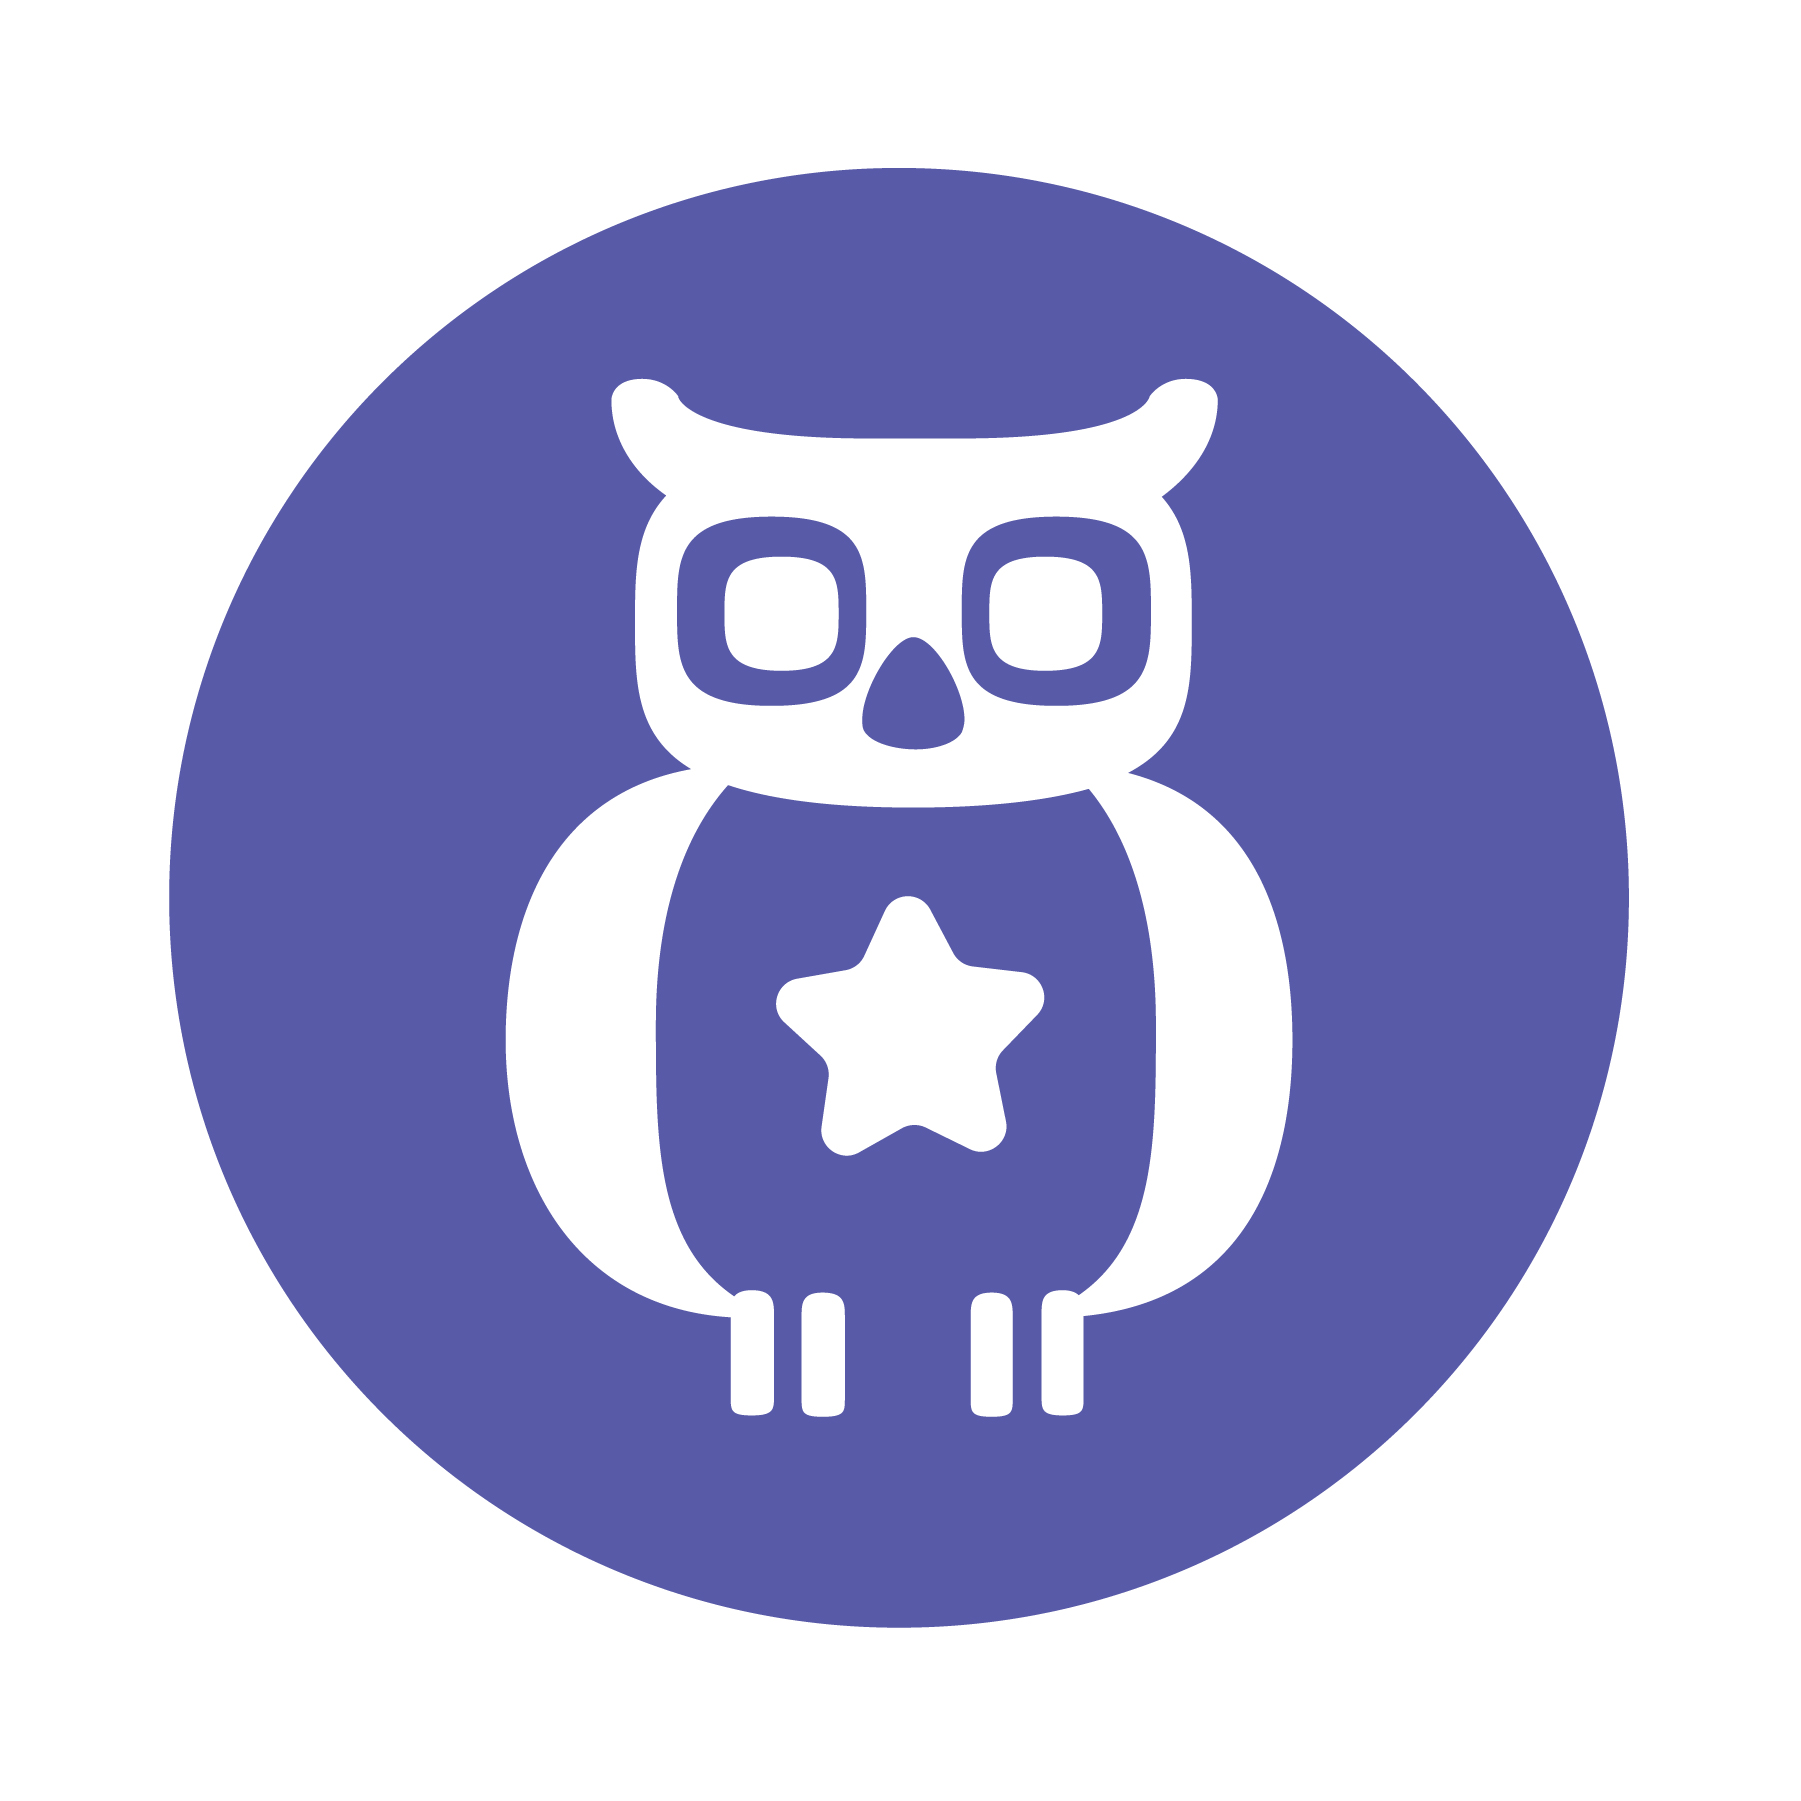 StarOwl Design logo design by logo designer Dandelion Studio for your inspiration and for the worlds largest logo competition